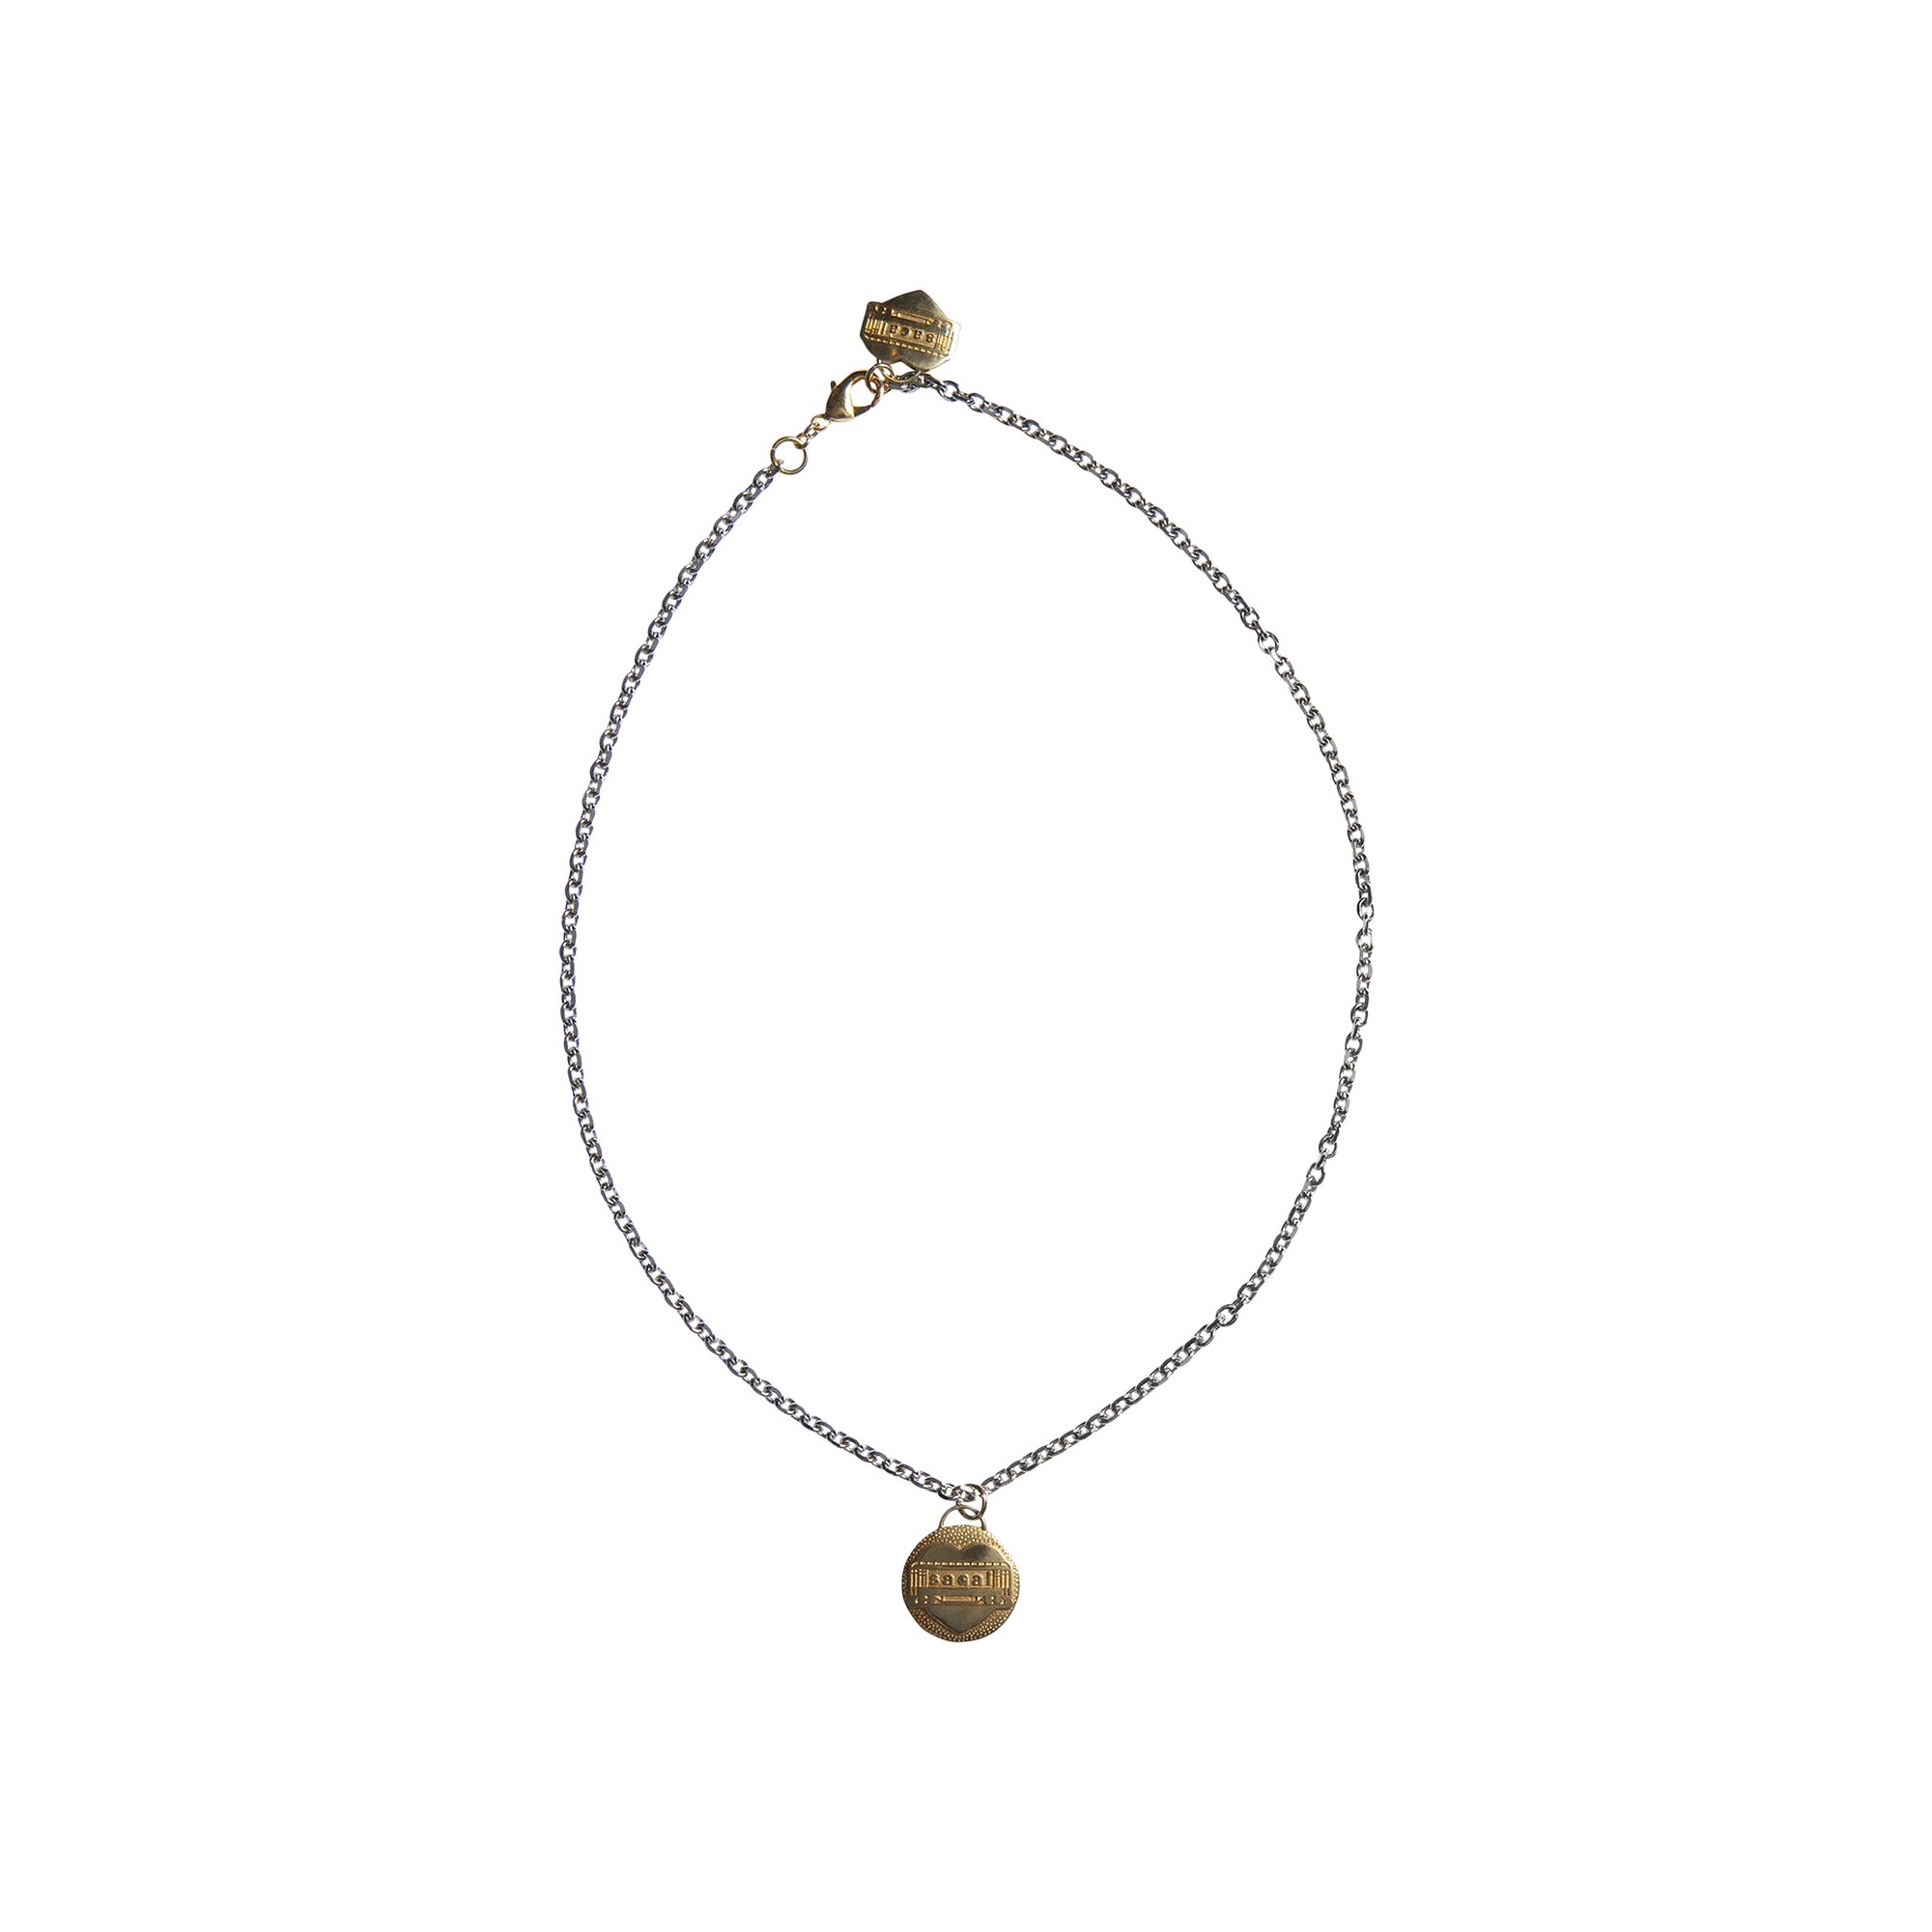 Buy Carhartt WIP x Sacai Necklace B 'Gold' - I033309 GOLD | GOAT NL